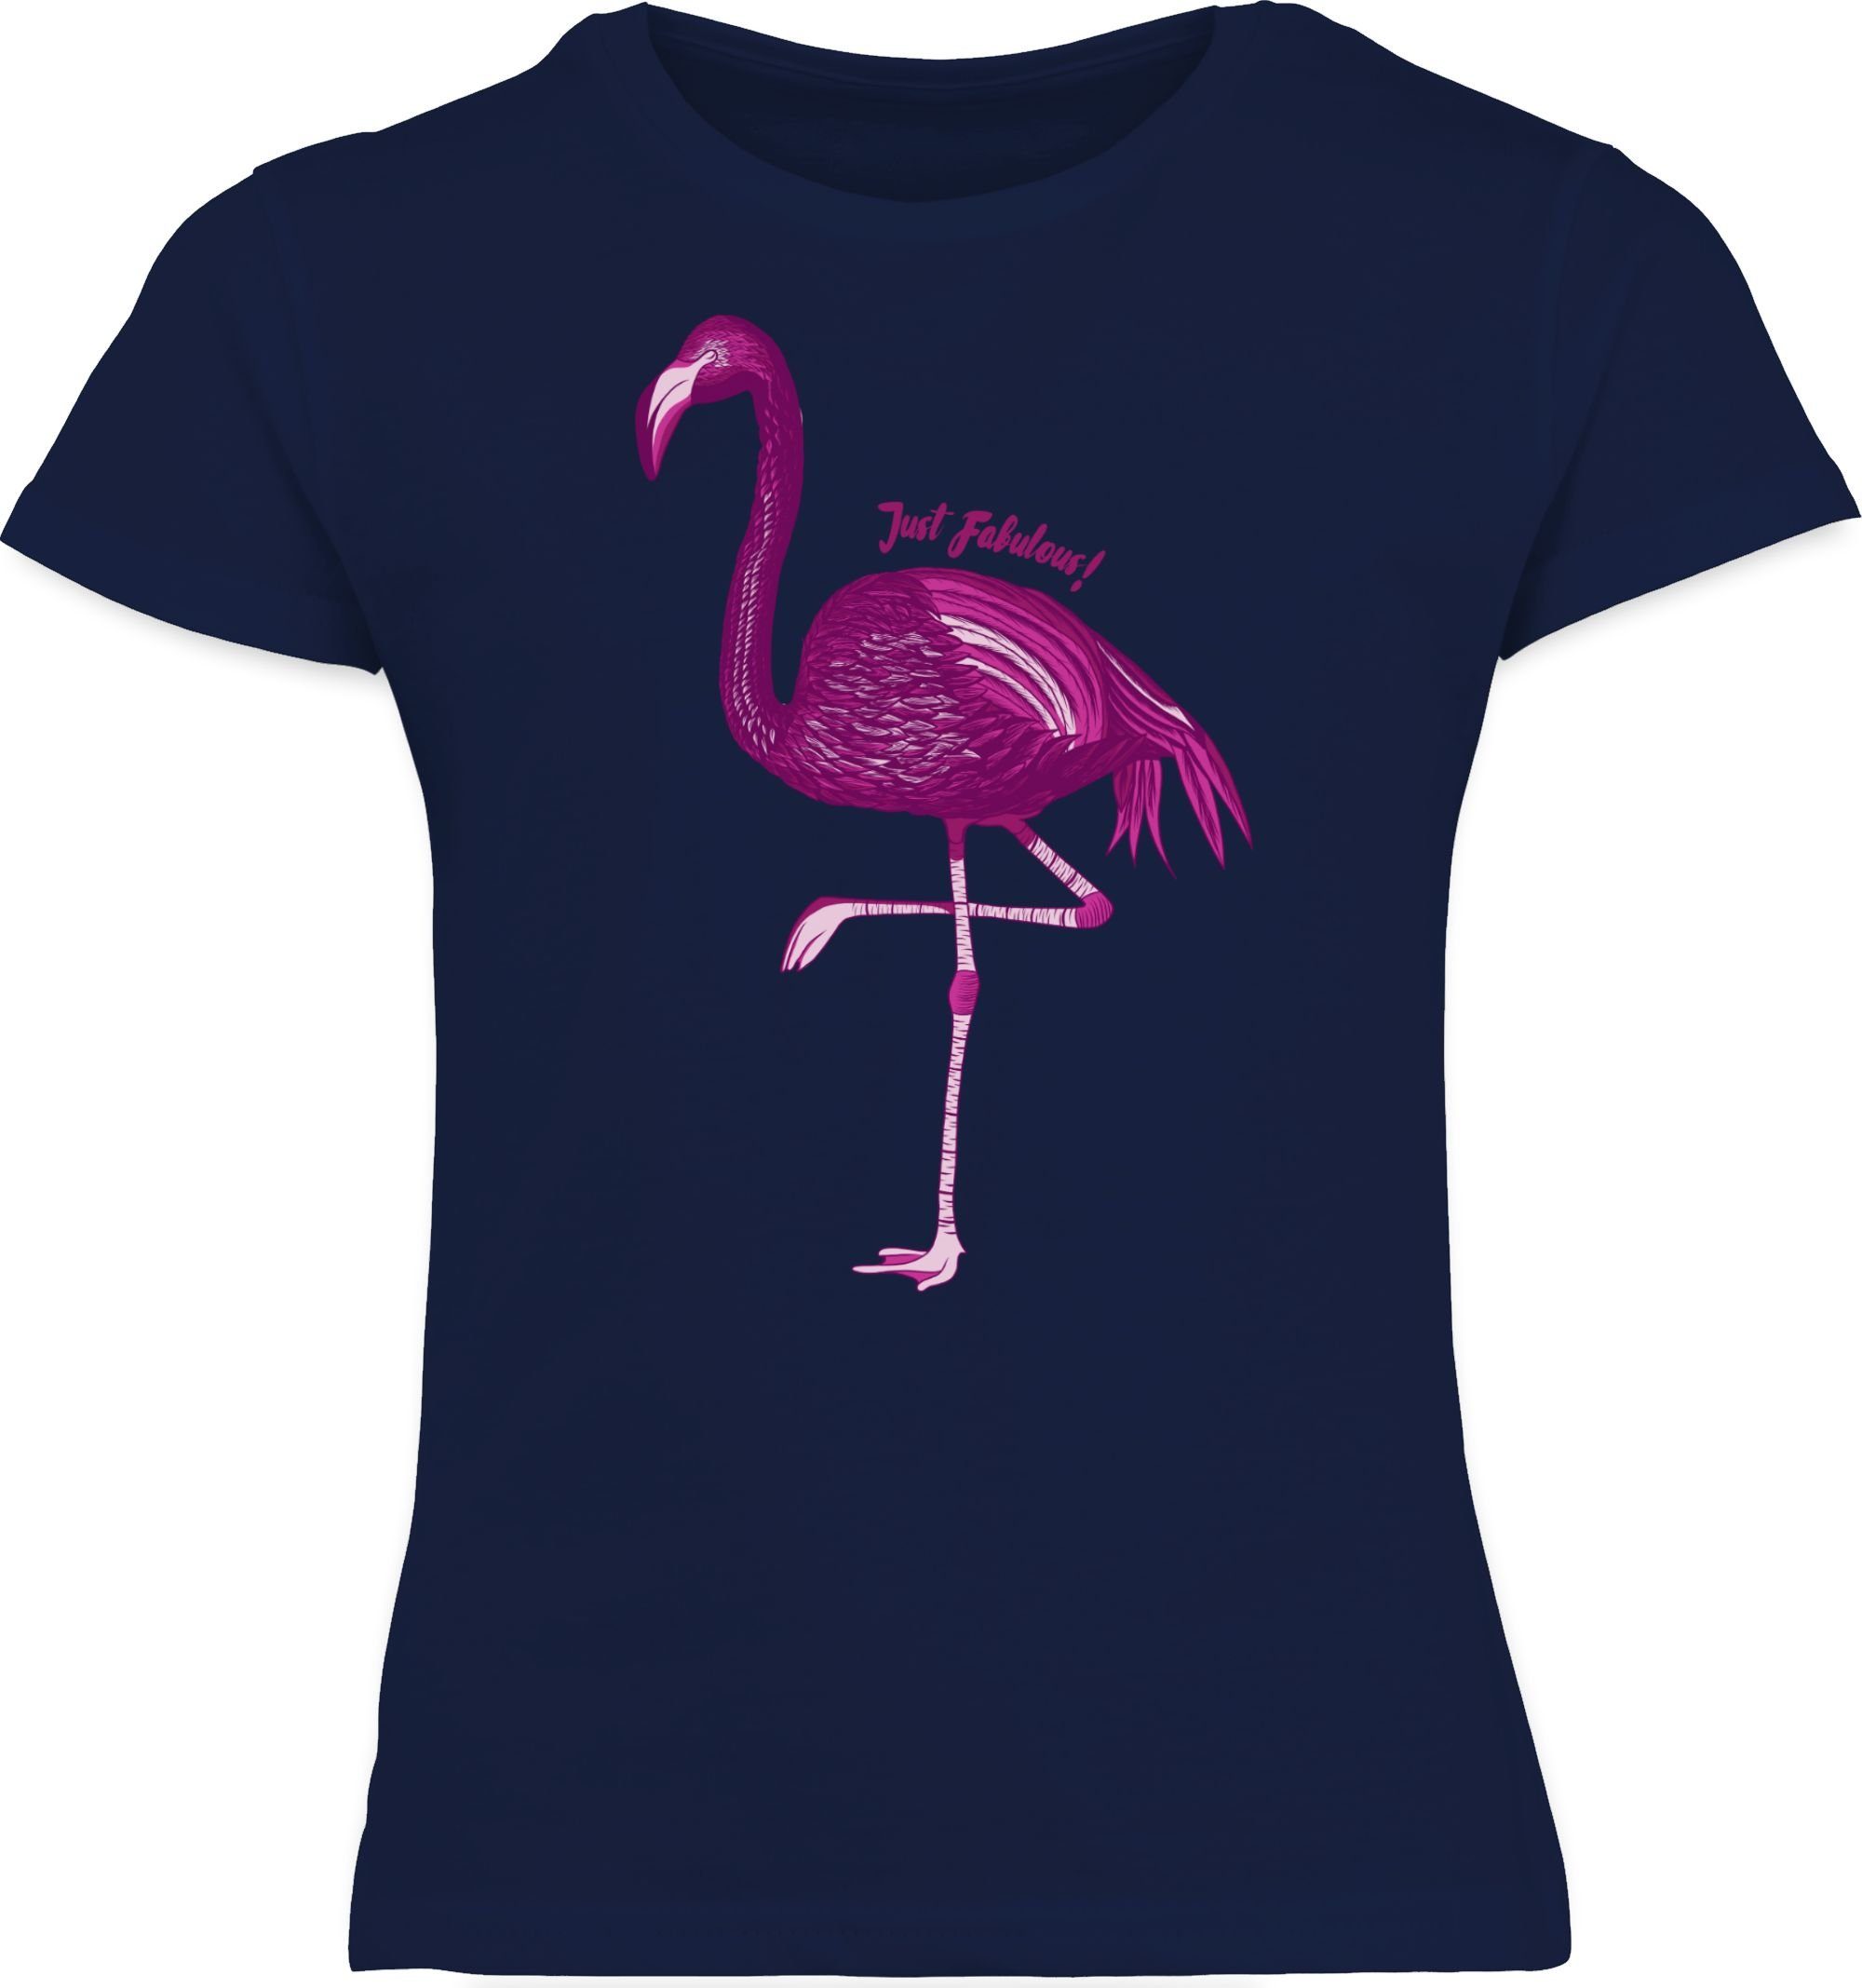 Shirtracer T-Shirt Flamingo 2 Fabulous Tiermotiv - Just Animal Print Dunkelblau